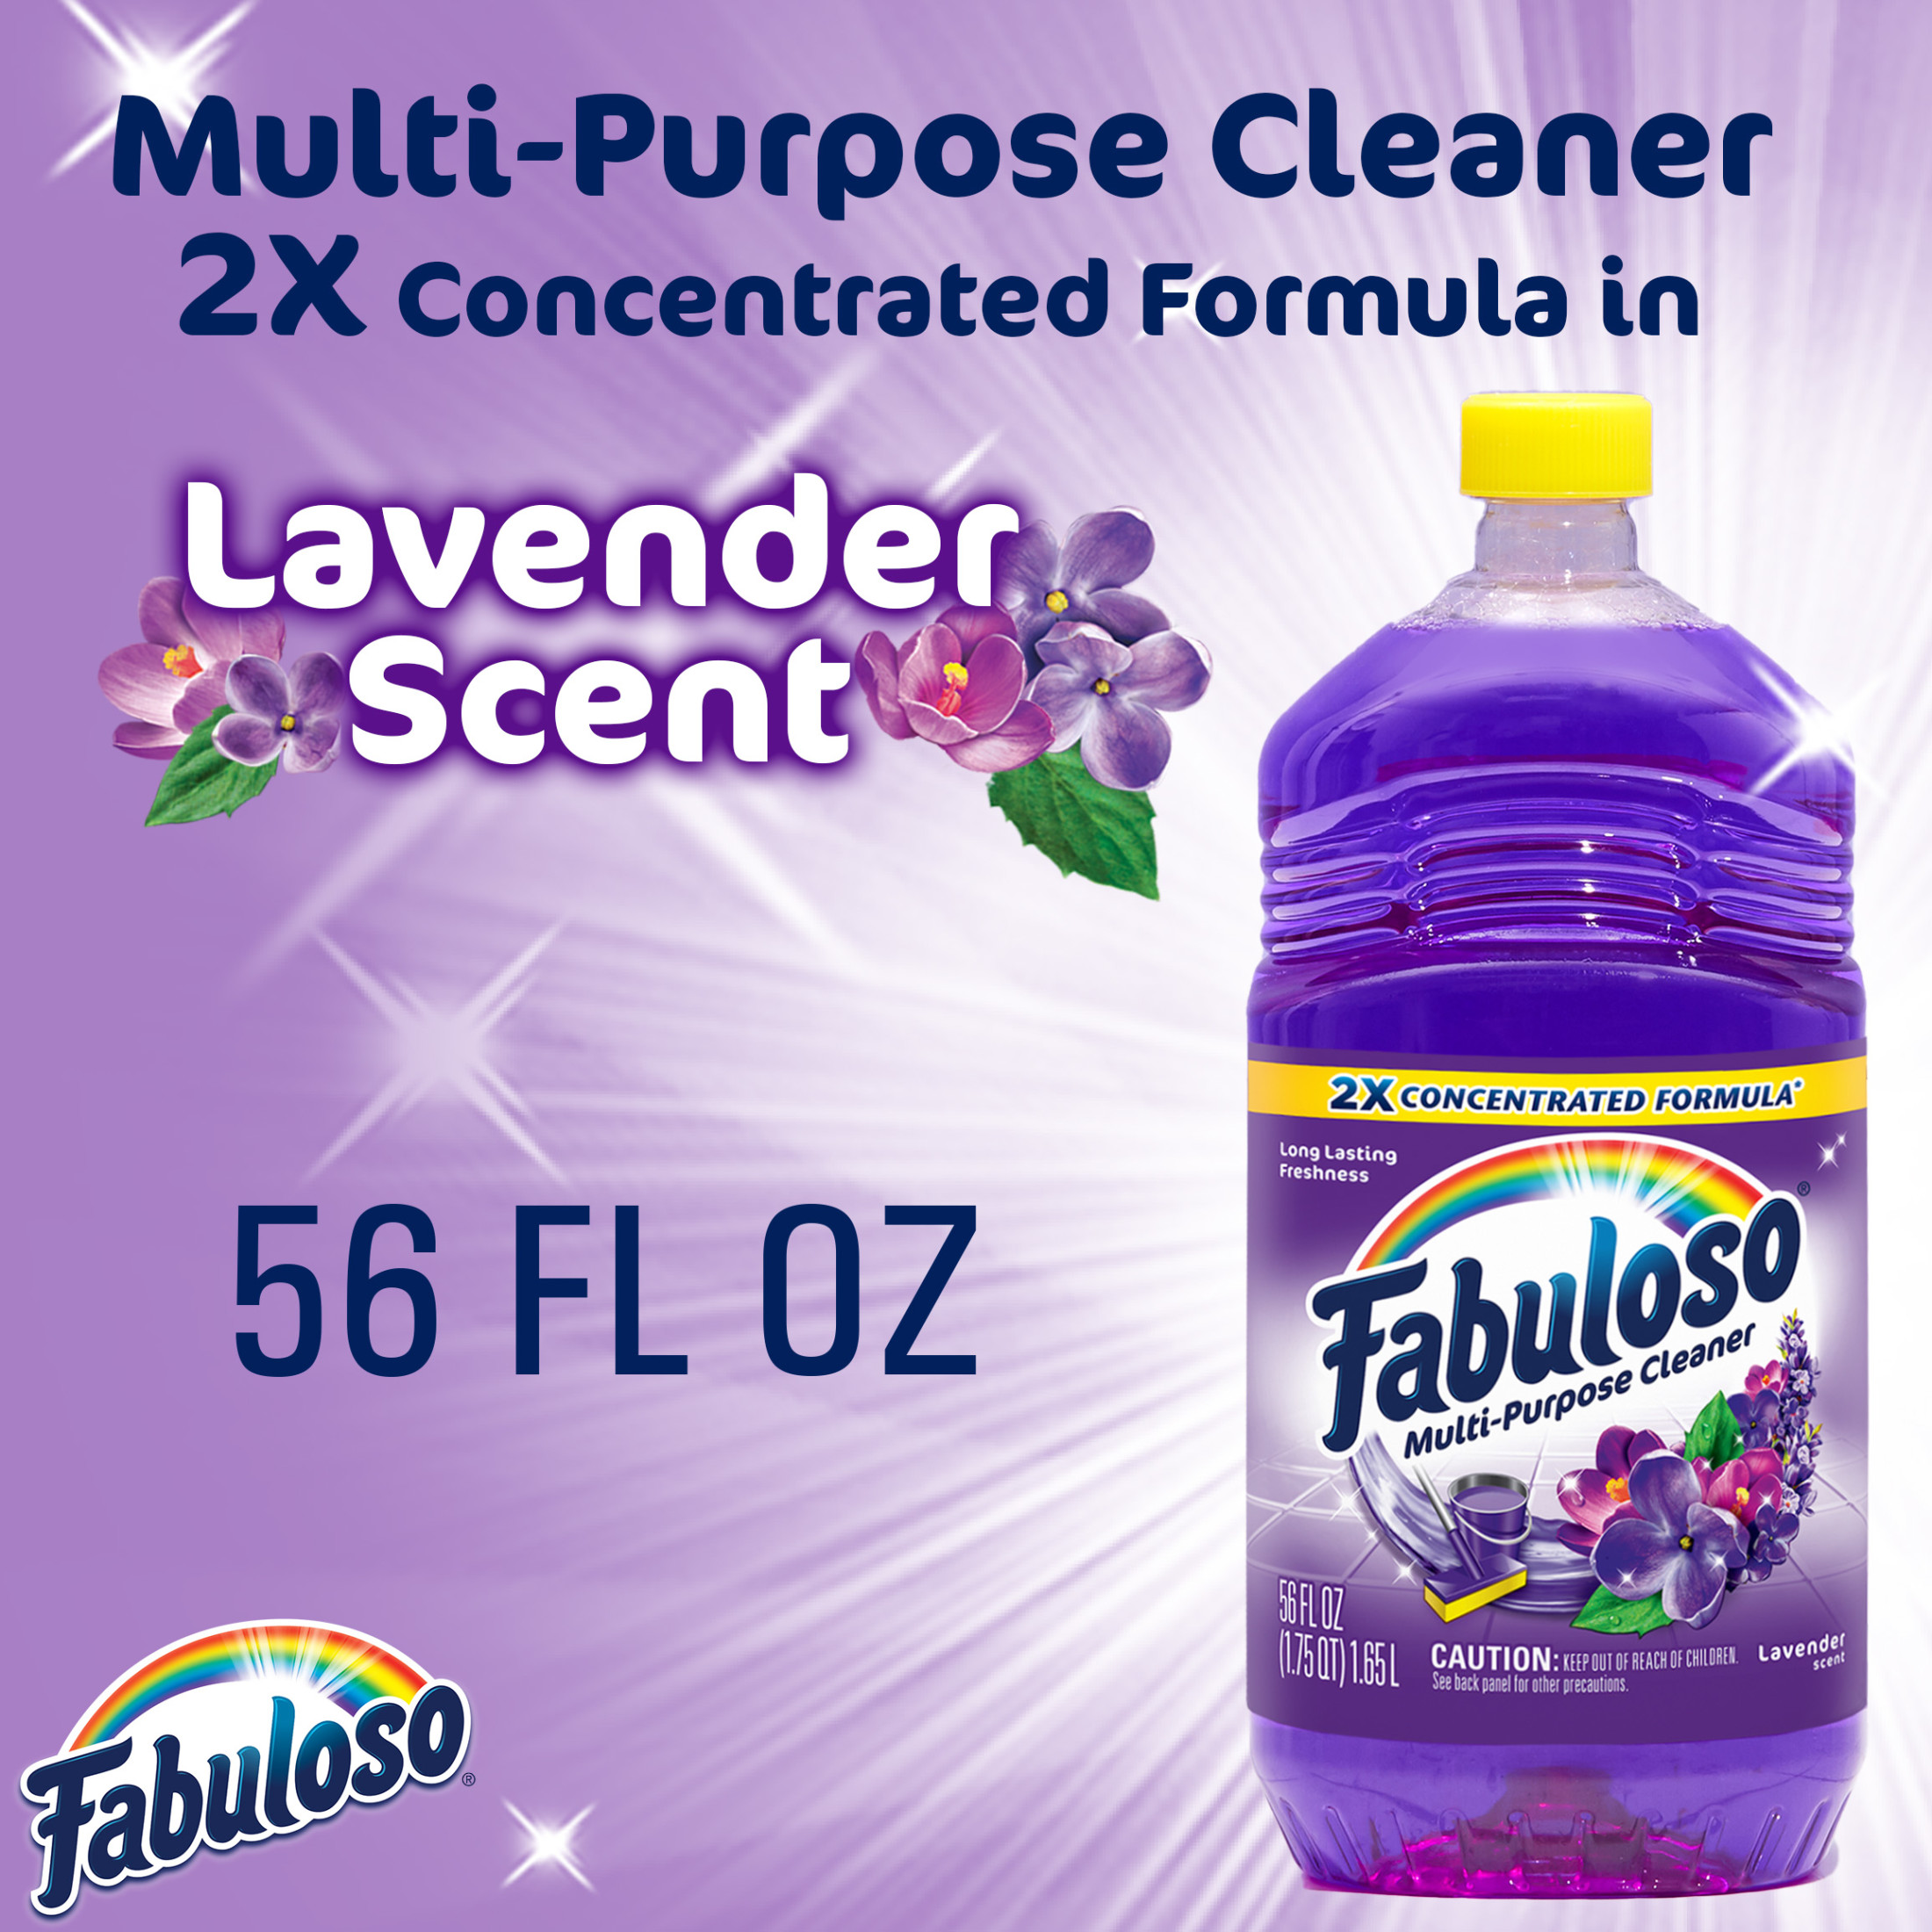 Fabuloso Multi-Purpose Cleaner, 2X Concentrated Formula, Lavender Scent, 56 oz - image 3 of 13